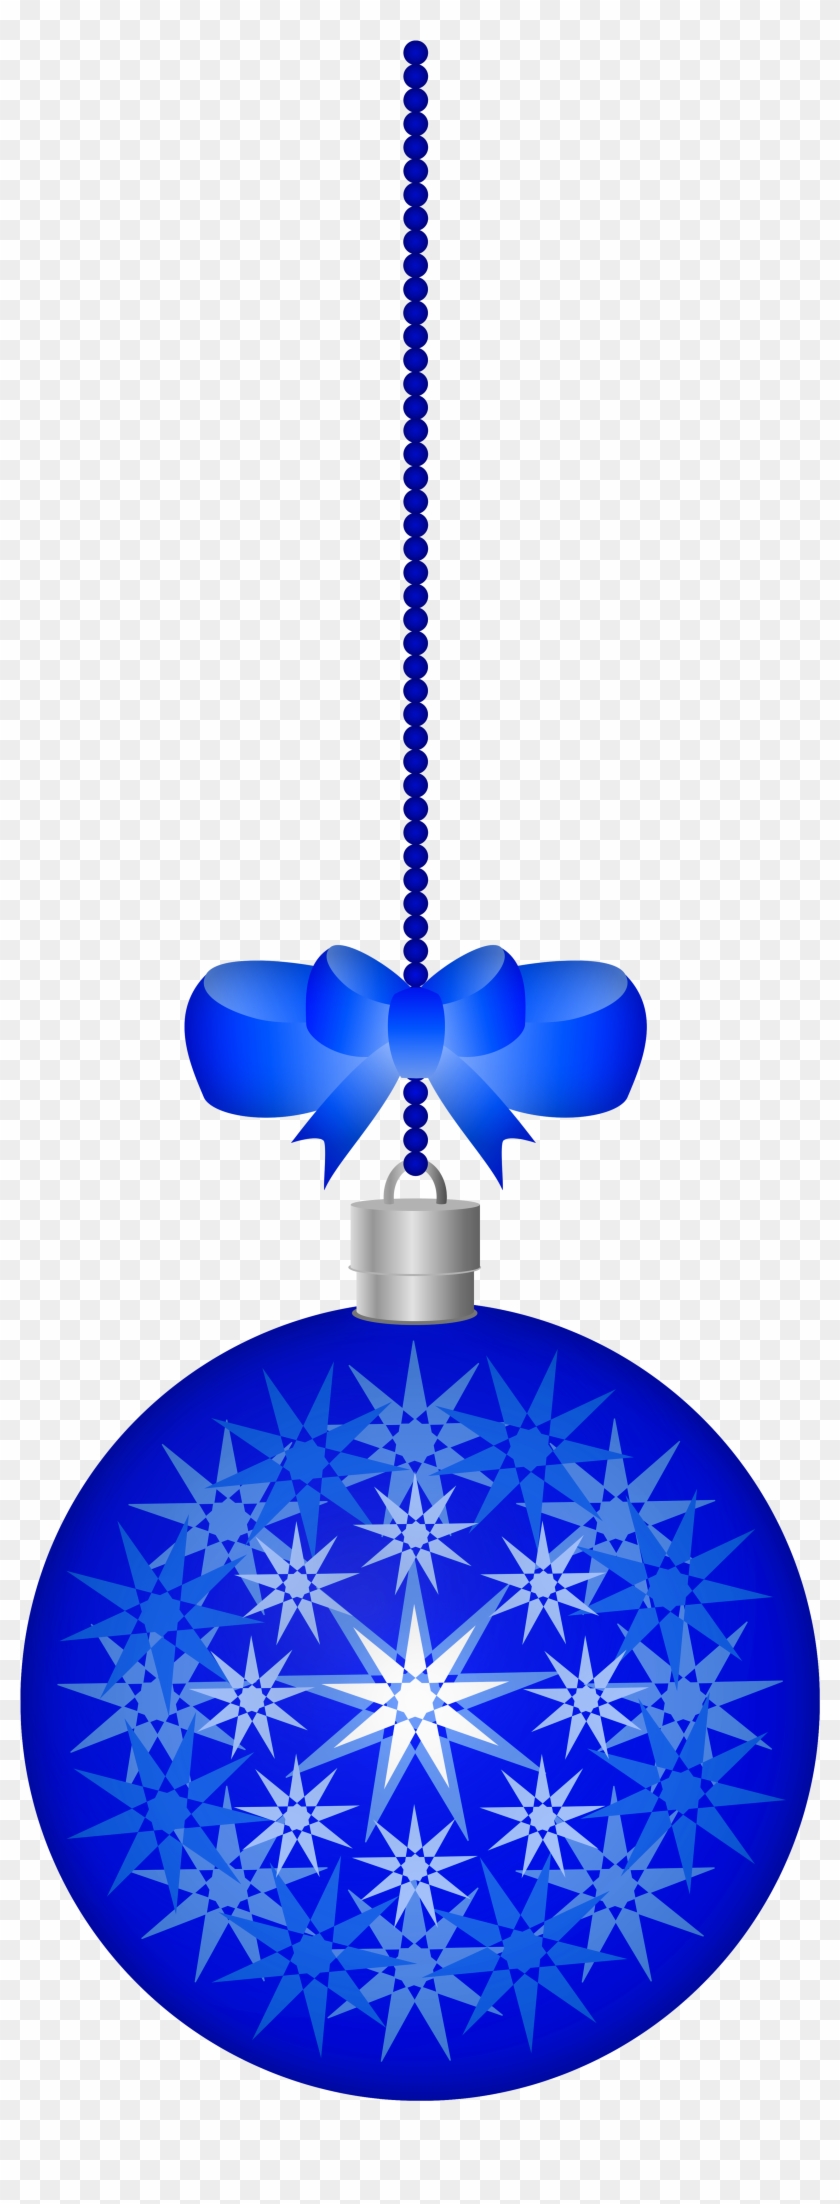 Christmas Ball Blue Transparent Png Clipart - Christmas Ball Blue Transparent Png Clipart #1416831